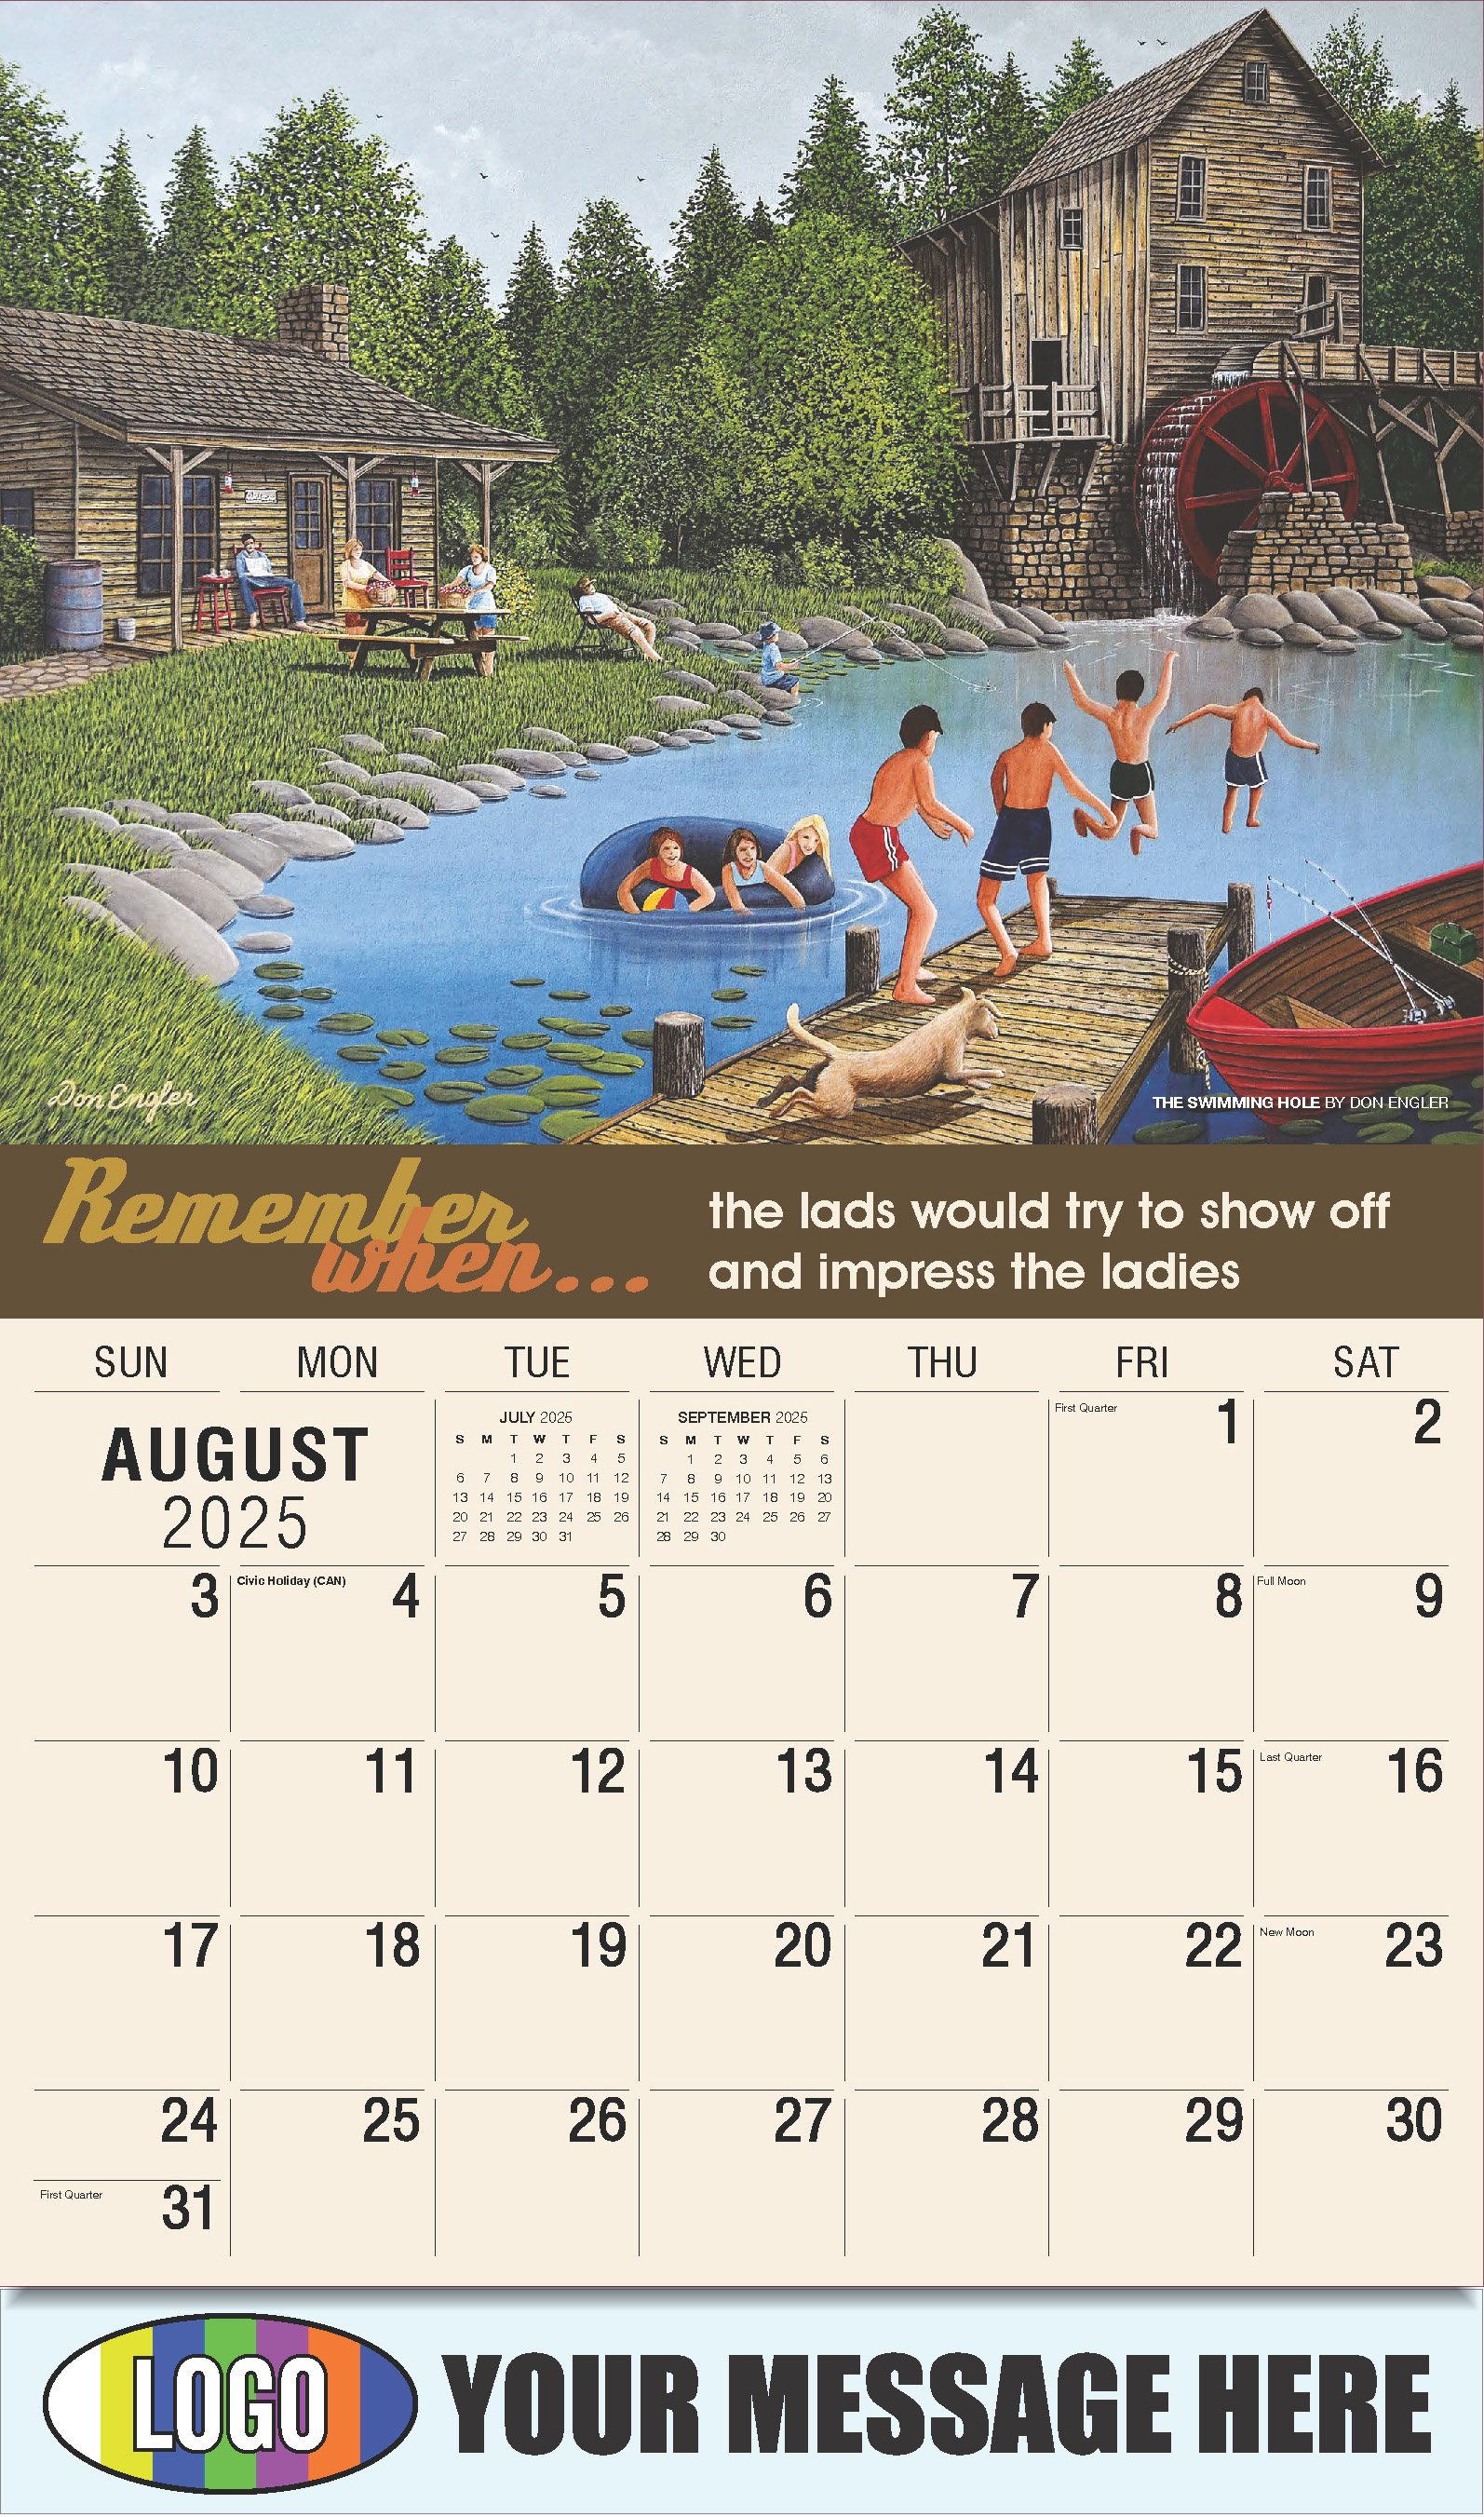 Remember When 2025 Business Advertising Calendar - August